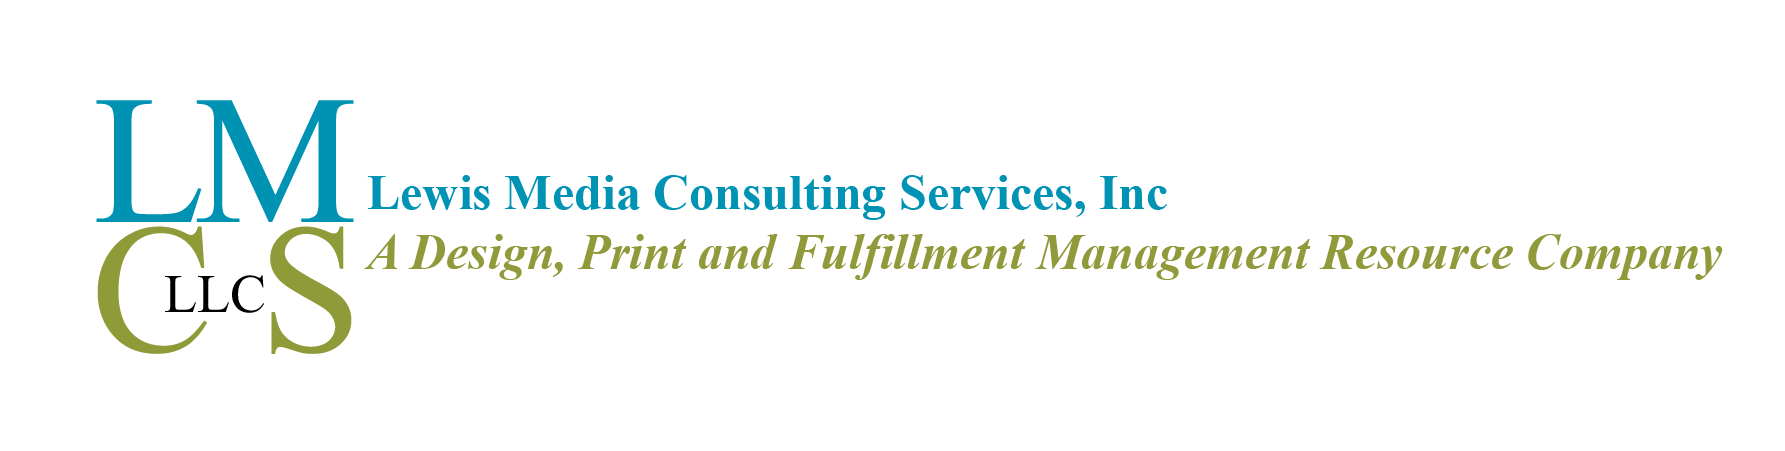 Lewis Media Consulting Services, LLC, Stafford, VA 's Logo